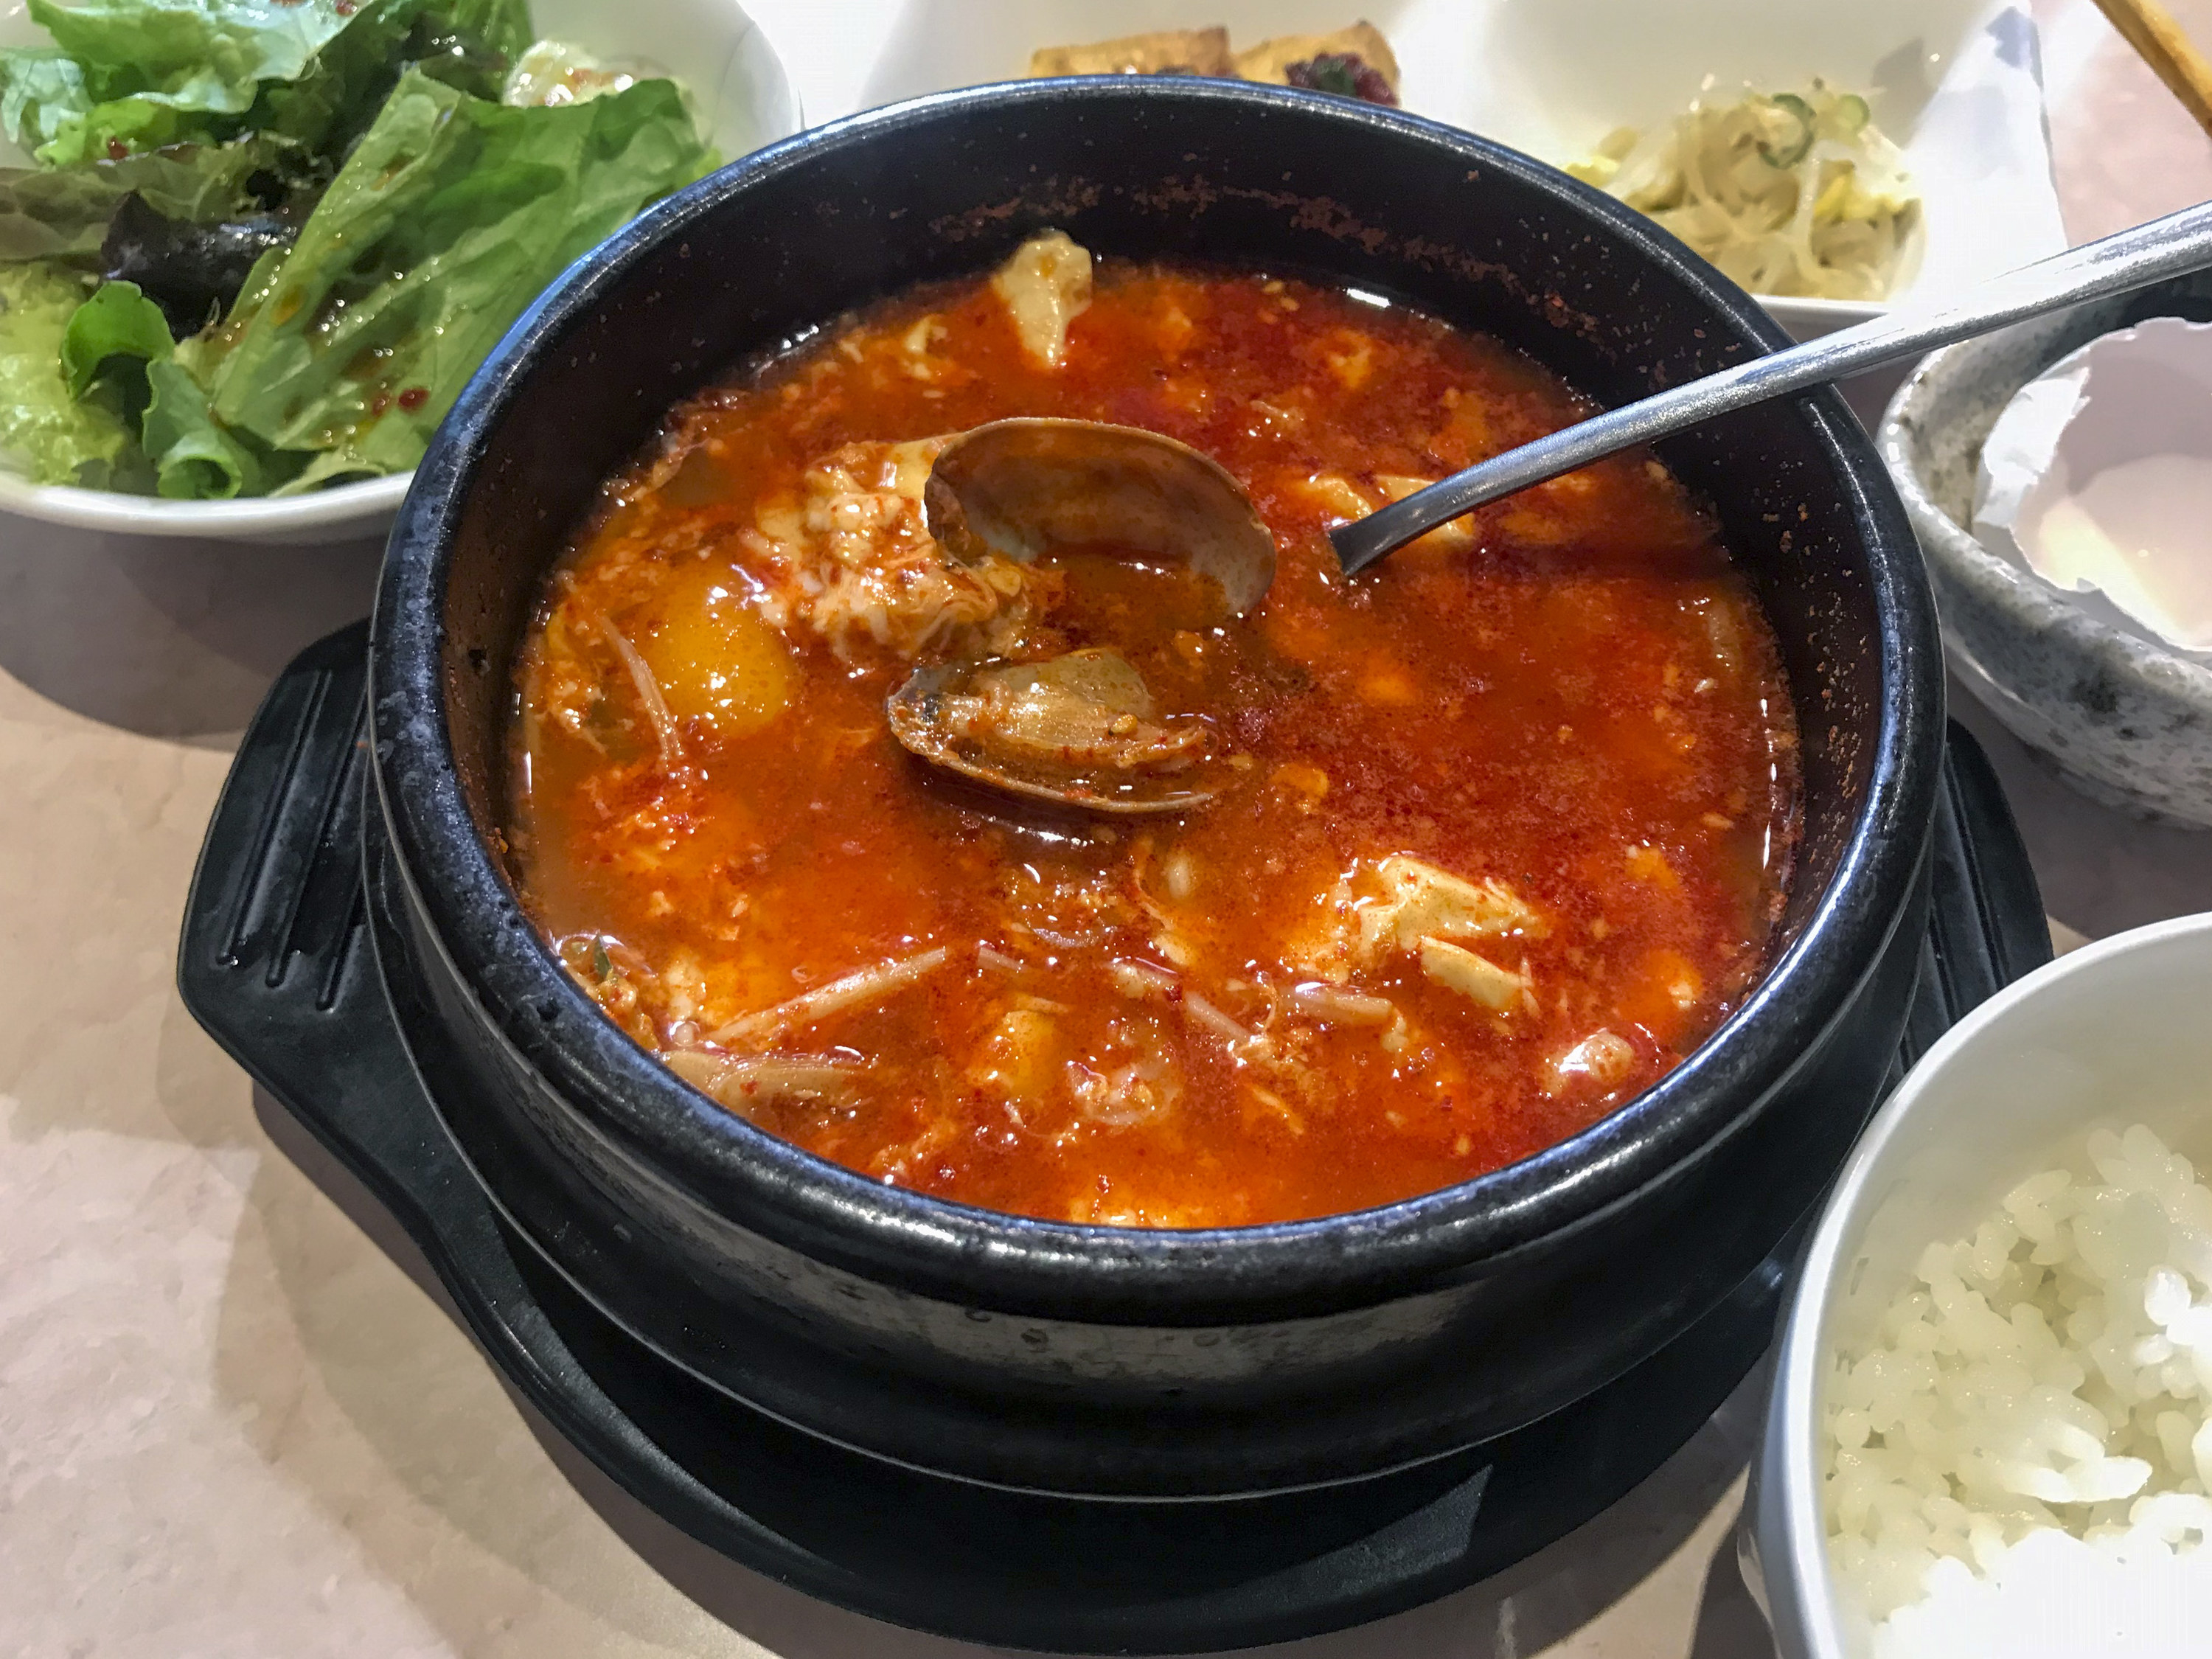 A bowl of Korean stew